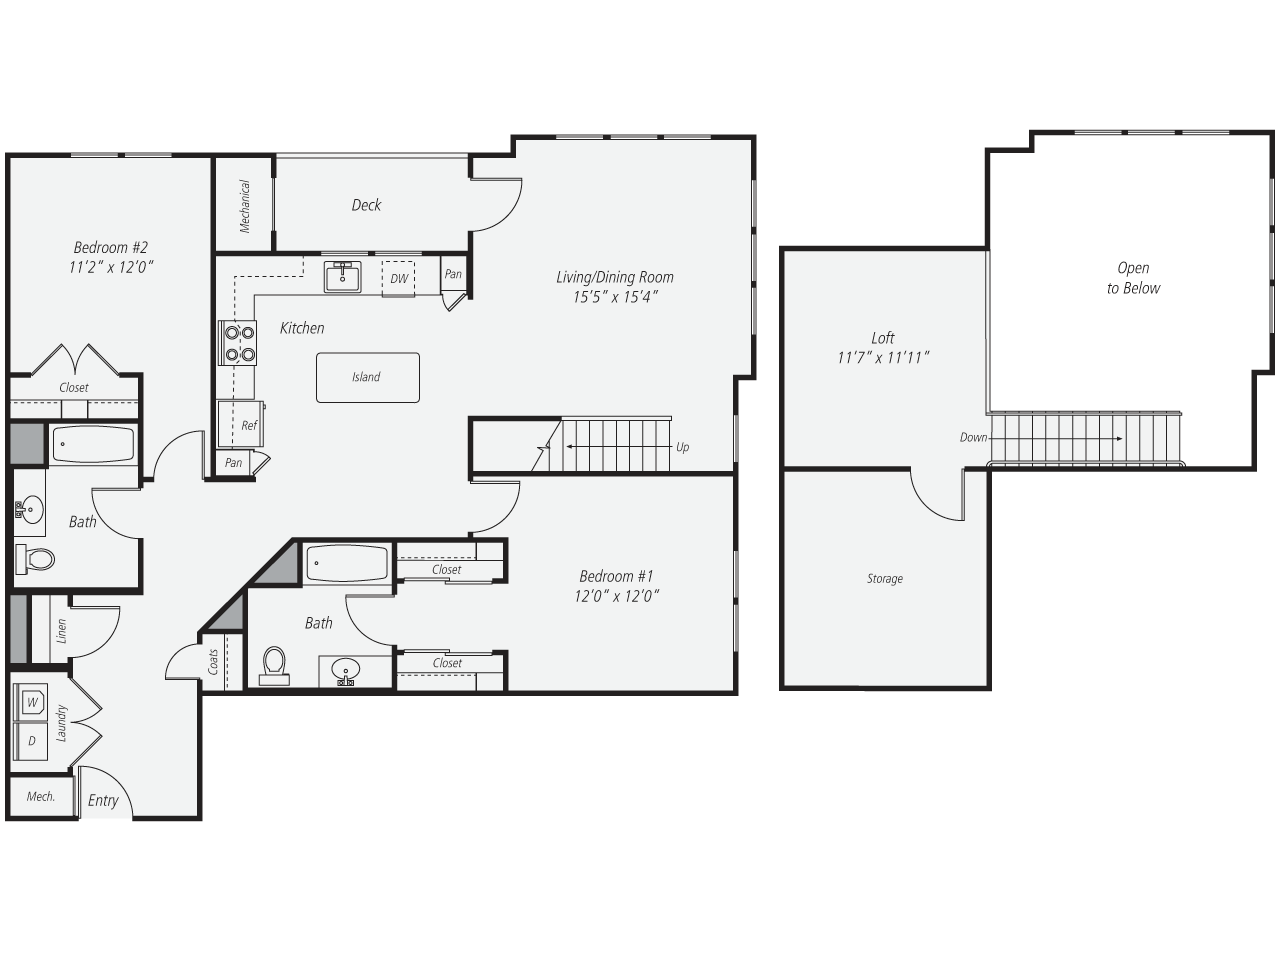 Floorplan for Apartment #465, 2 bedroom unit at Halstead Norwalk